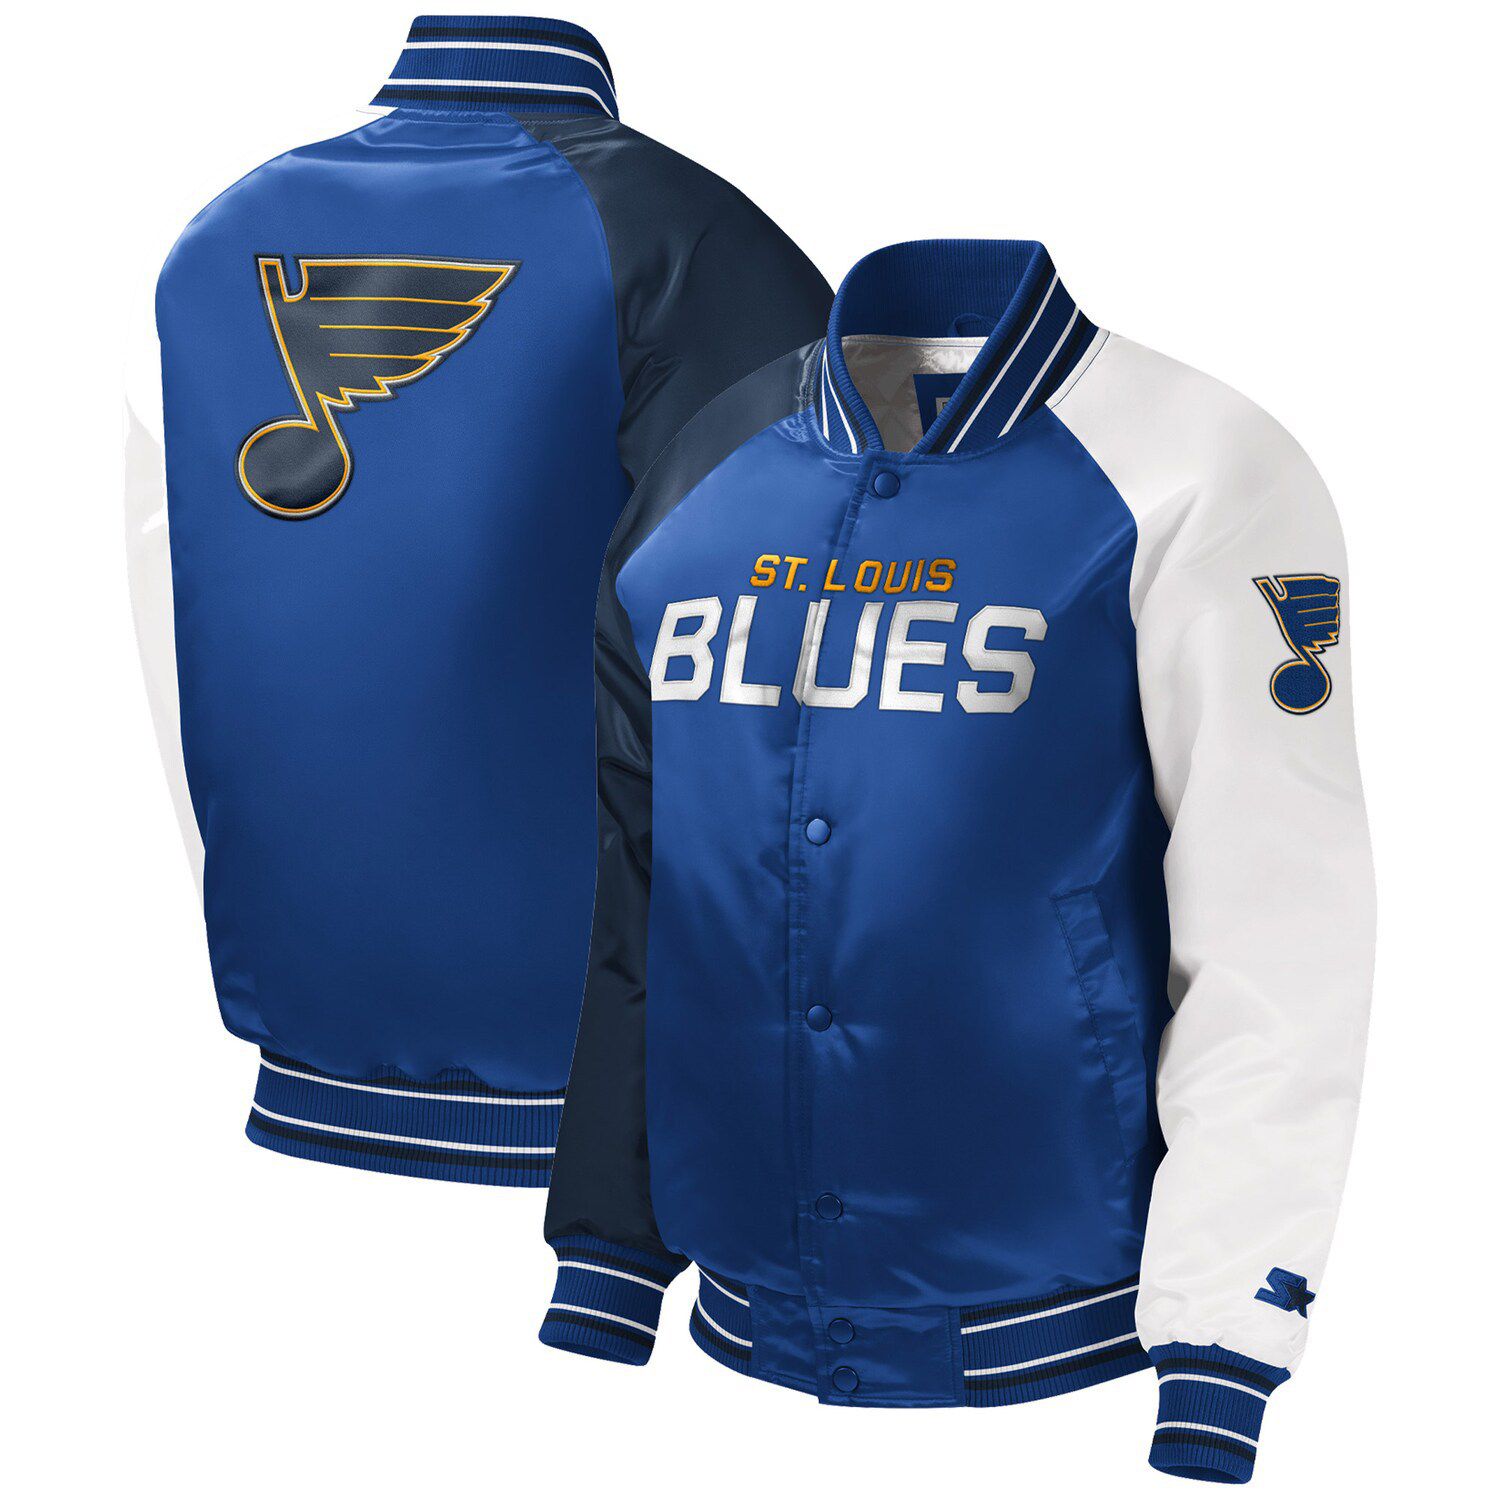 Men's Fanatics Branded Navy St. Louis Blues Locker Room Full-Zip Jacket